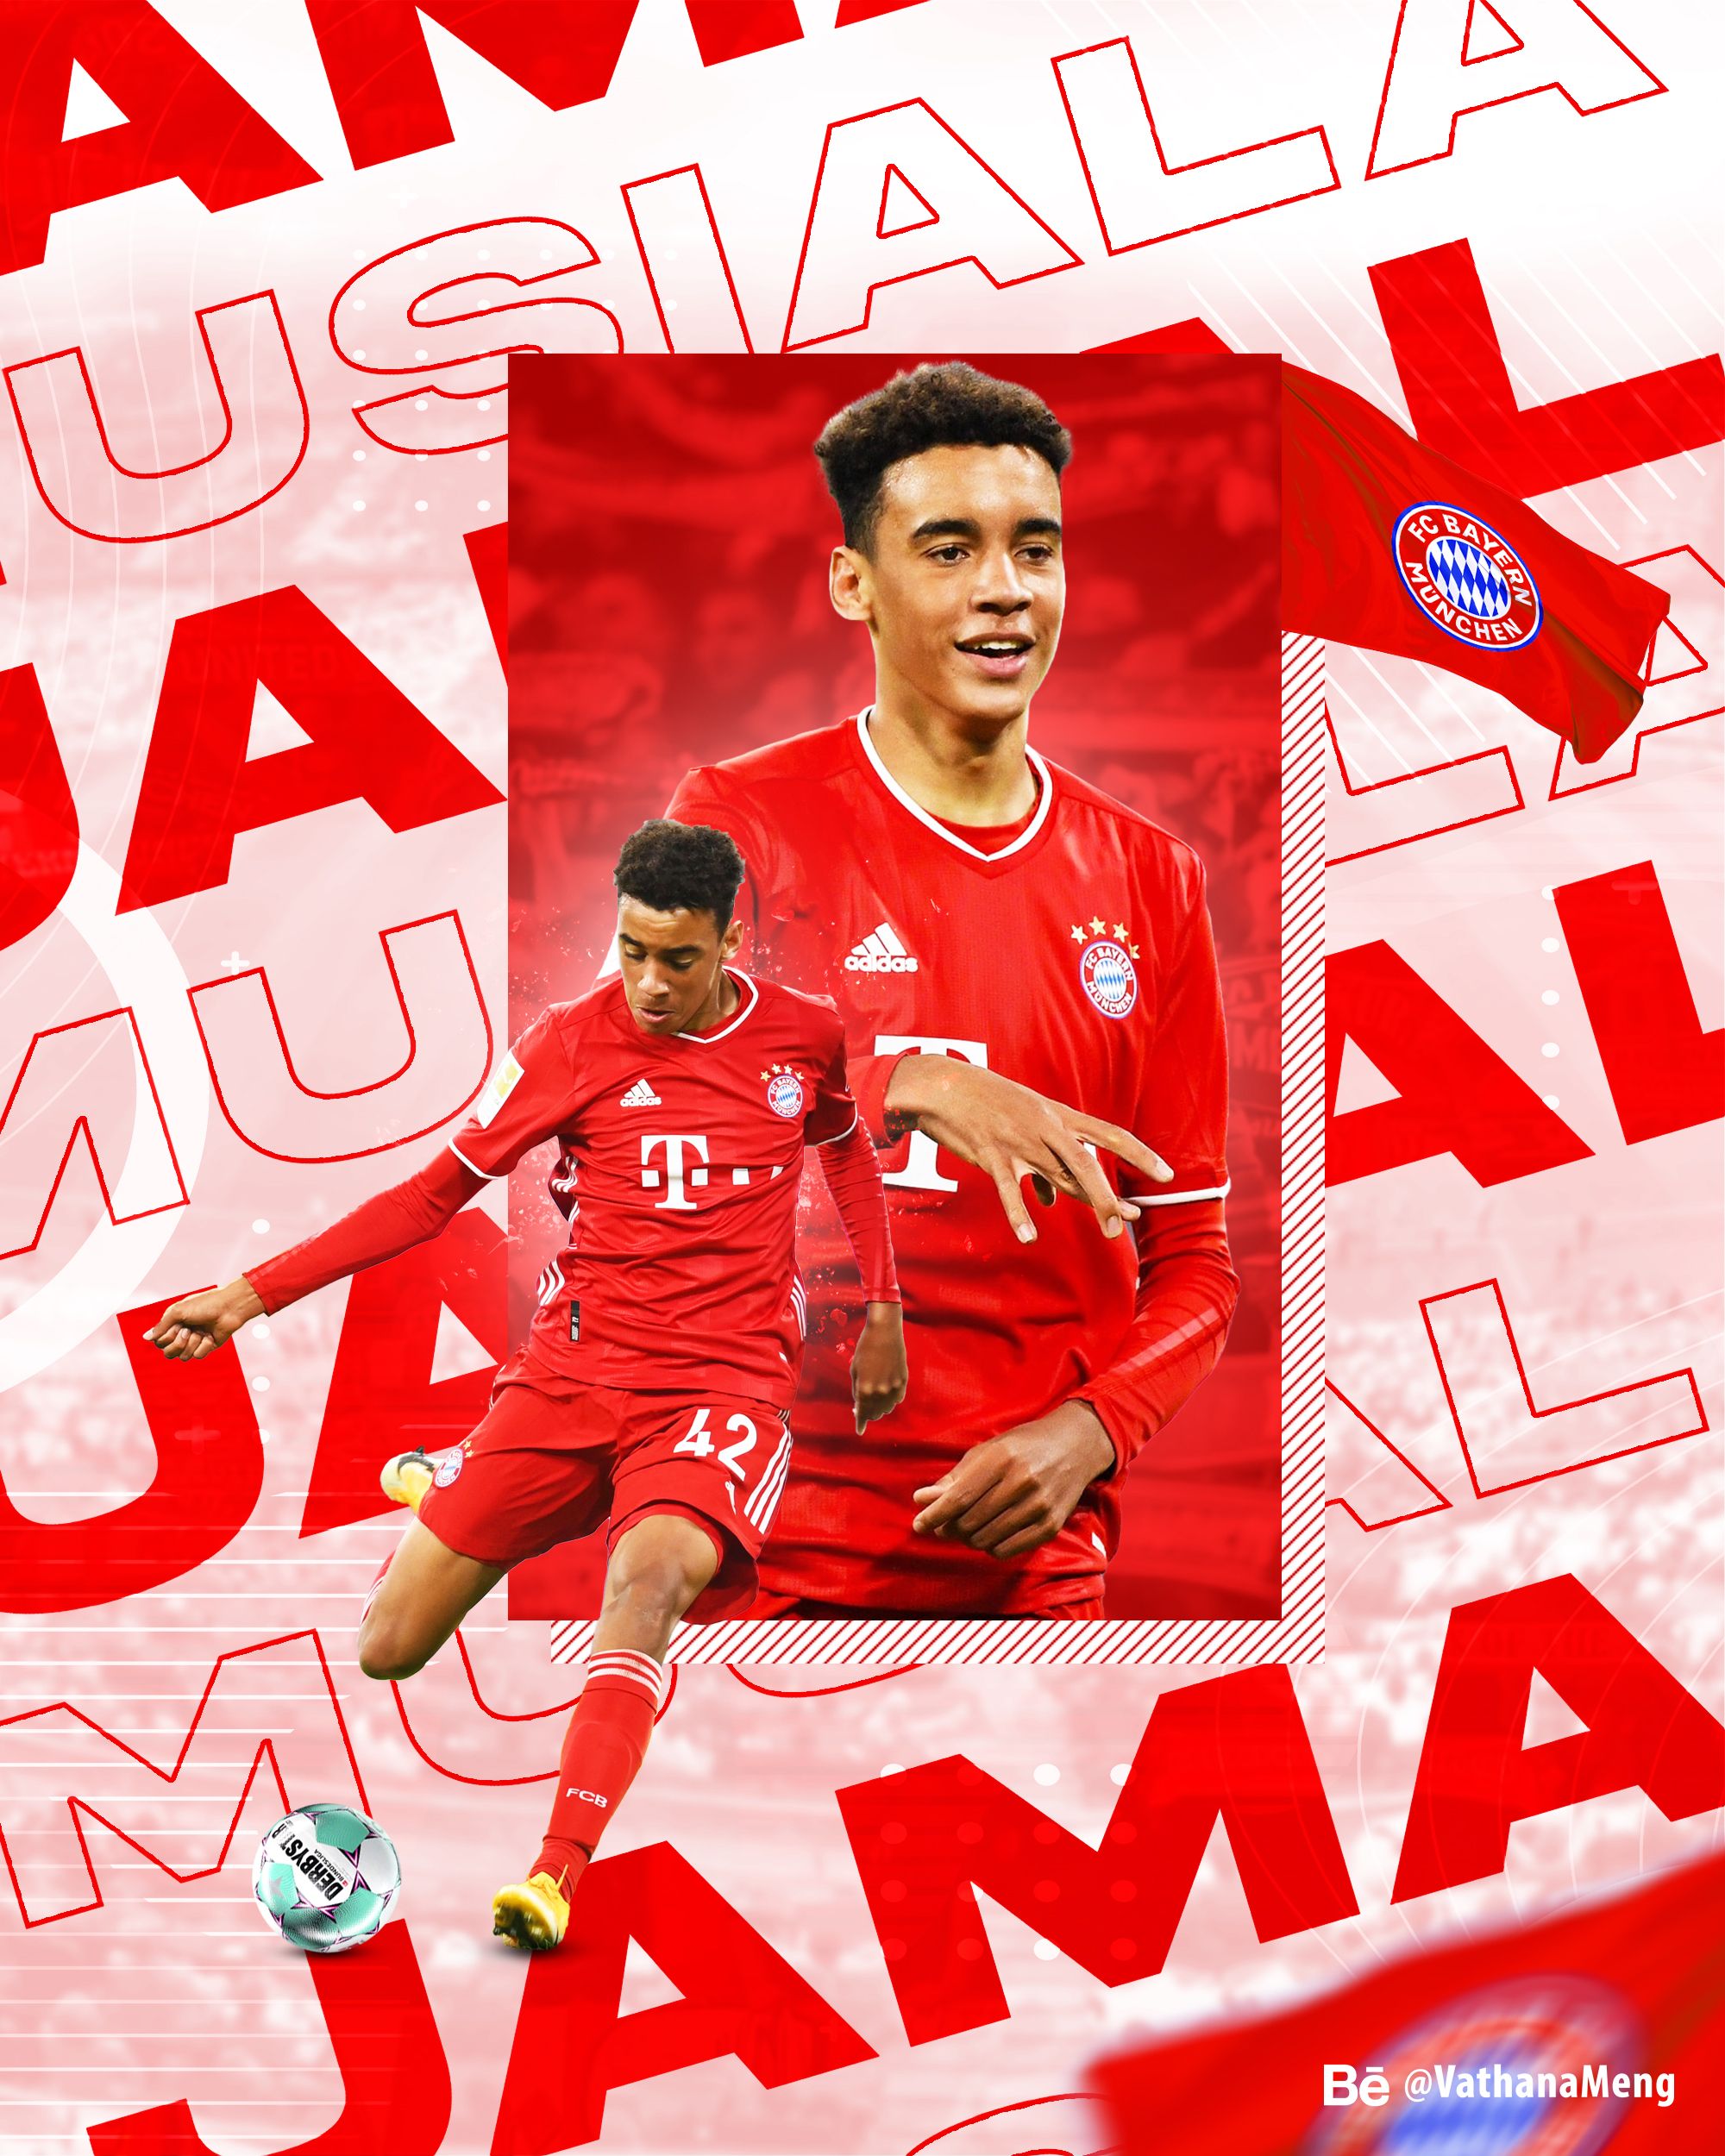 Jamal Musiala. Football poster, Sport poster design, Sports design inspiration